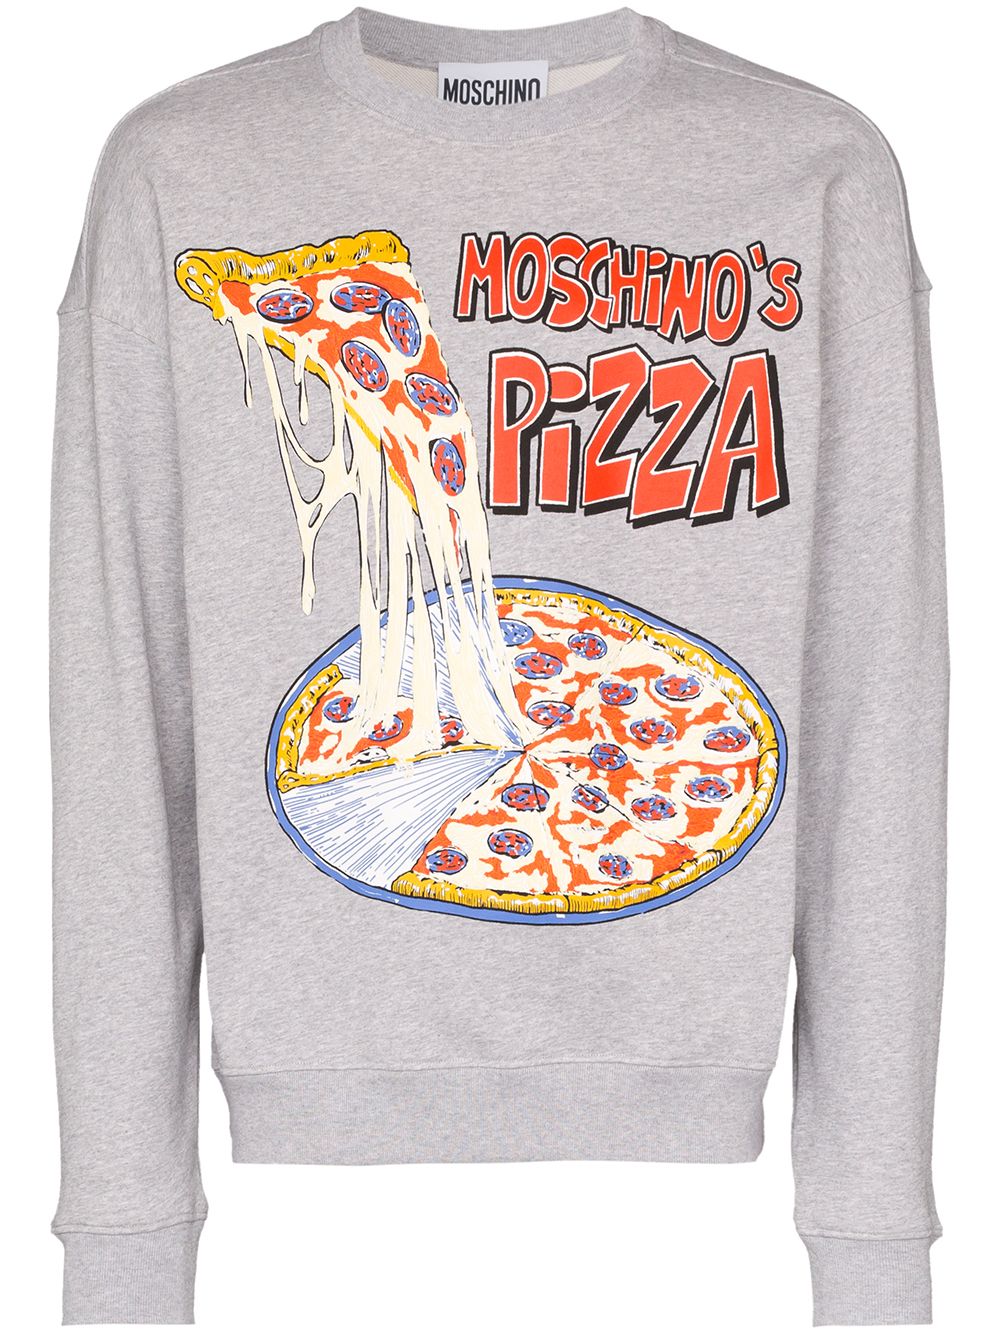 Moschino Moschino's Pizza Print Sweatshirt - Farfetch